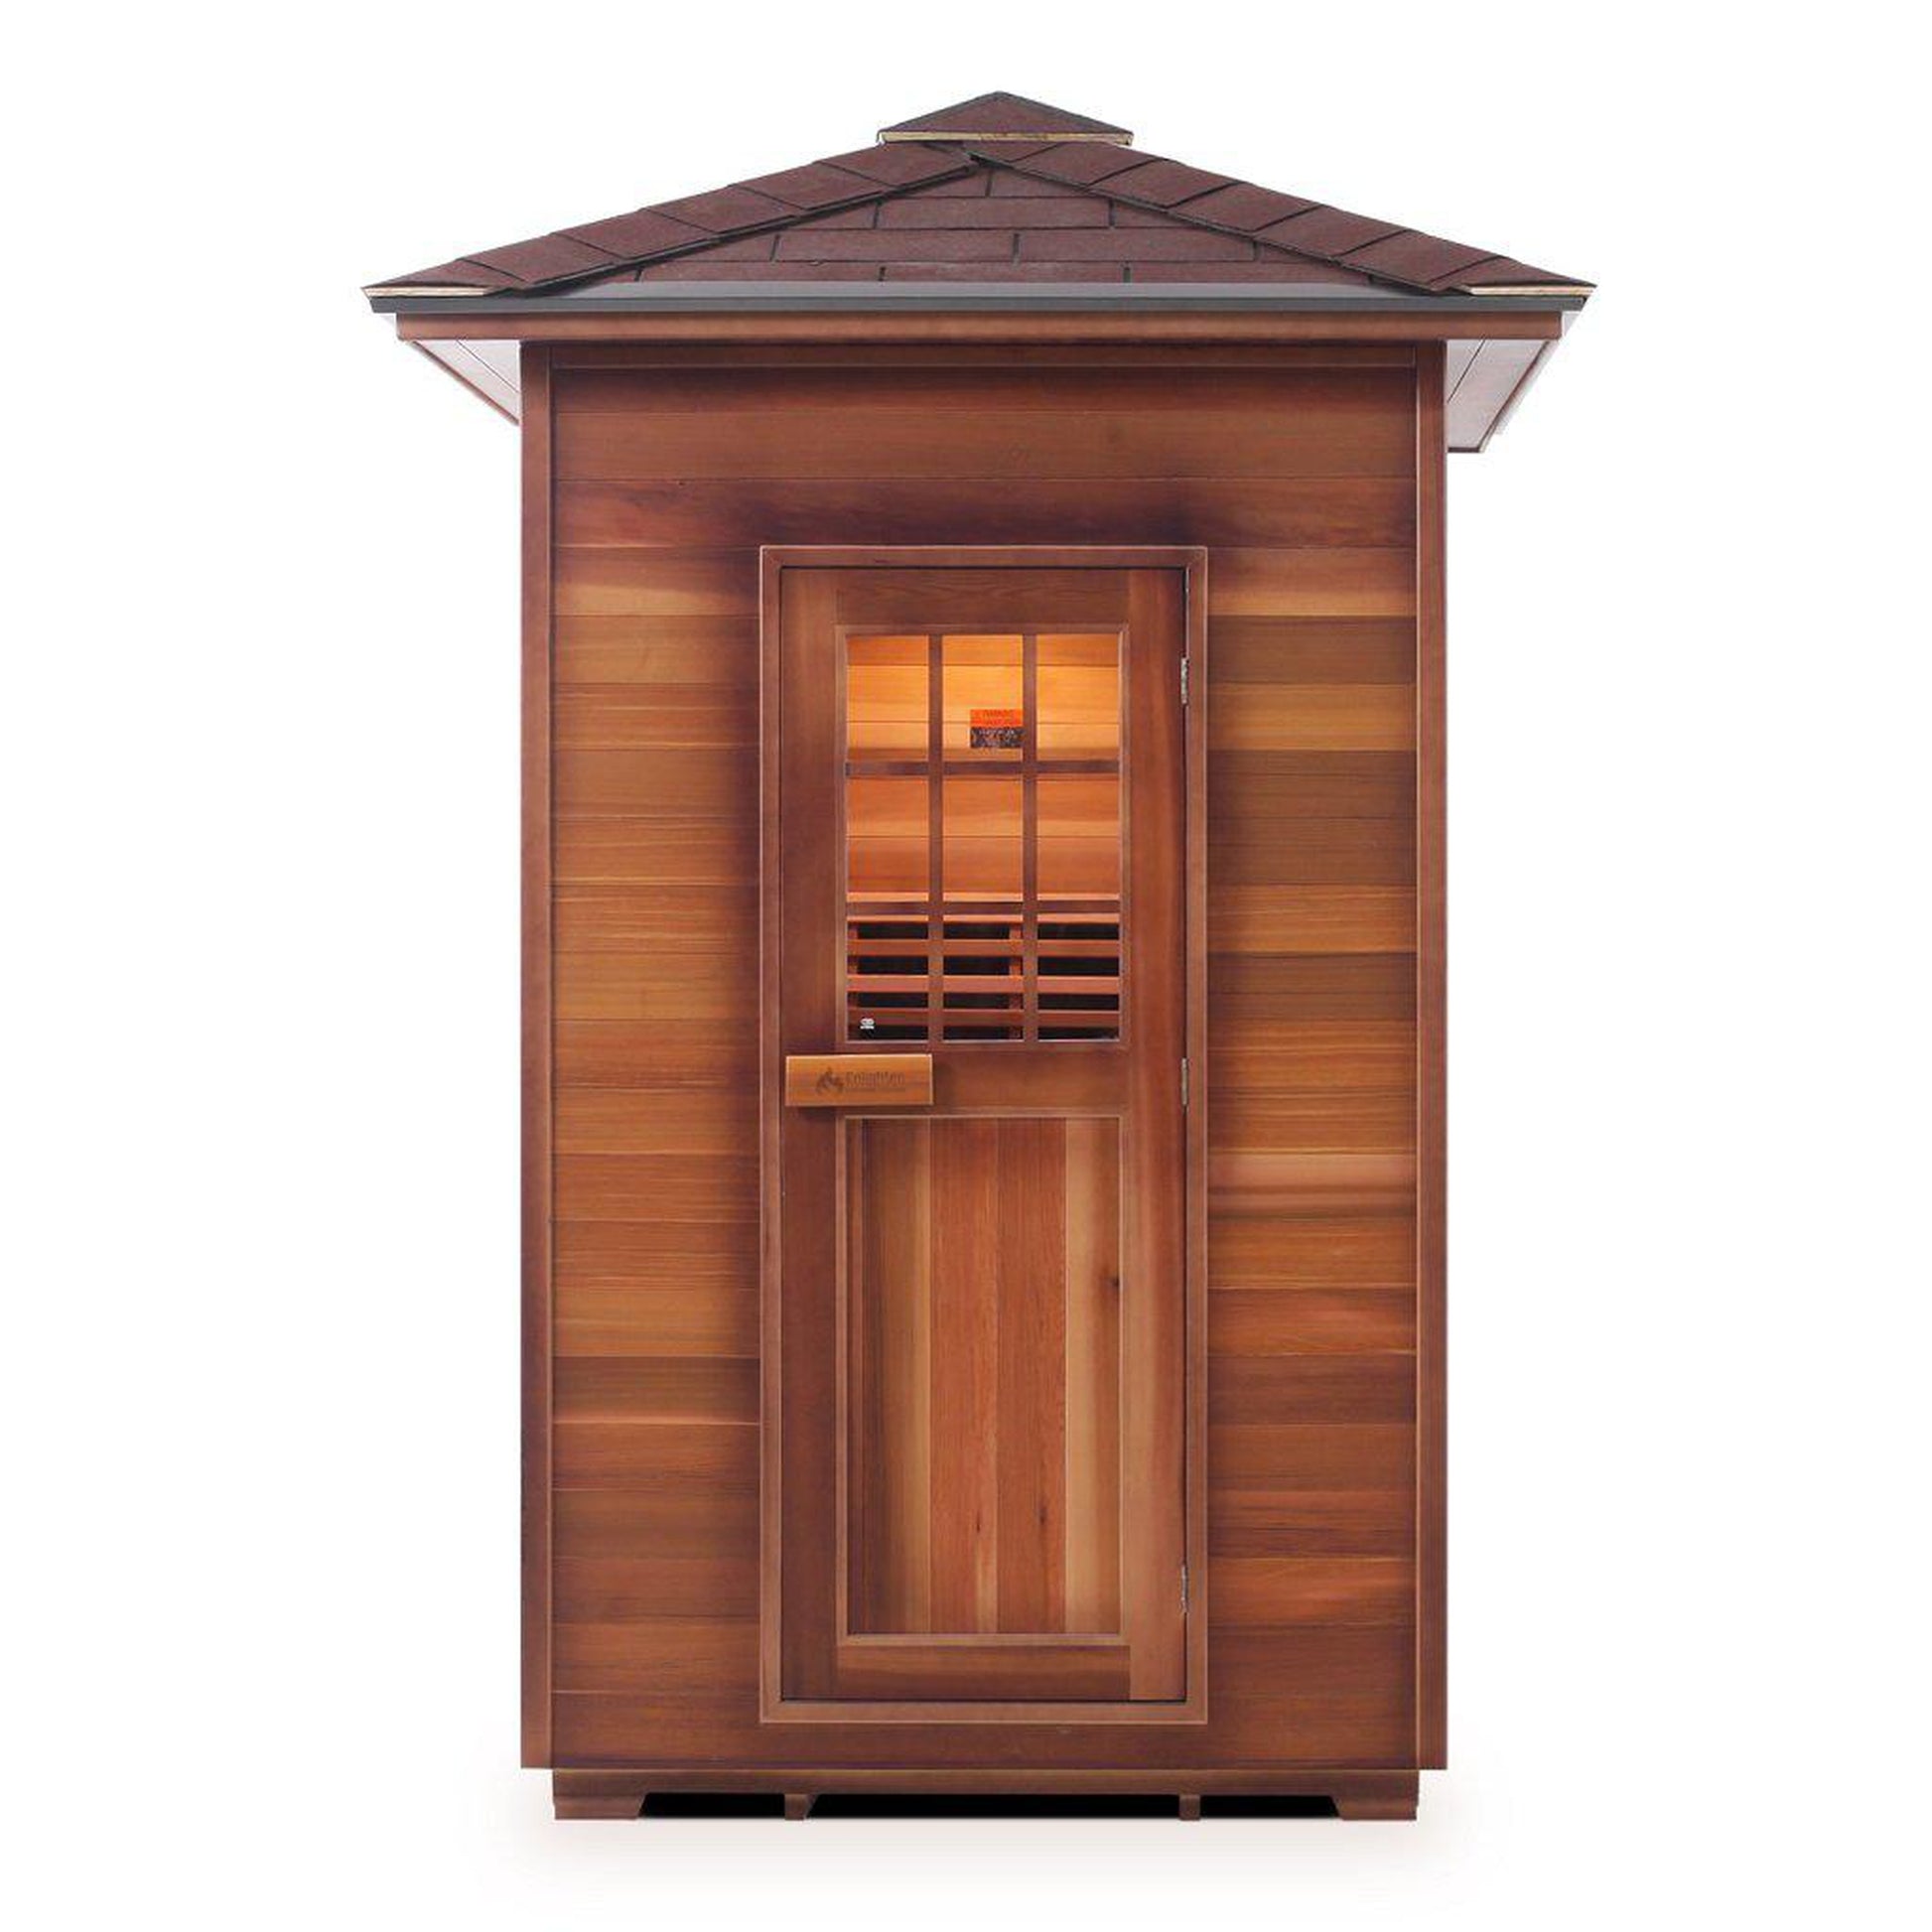 Enlighten InfraNature Original Sierra 2-Person Peak Roof Full Spectrum Infrared Outdoor Sauna